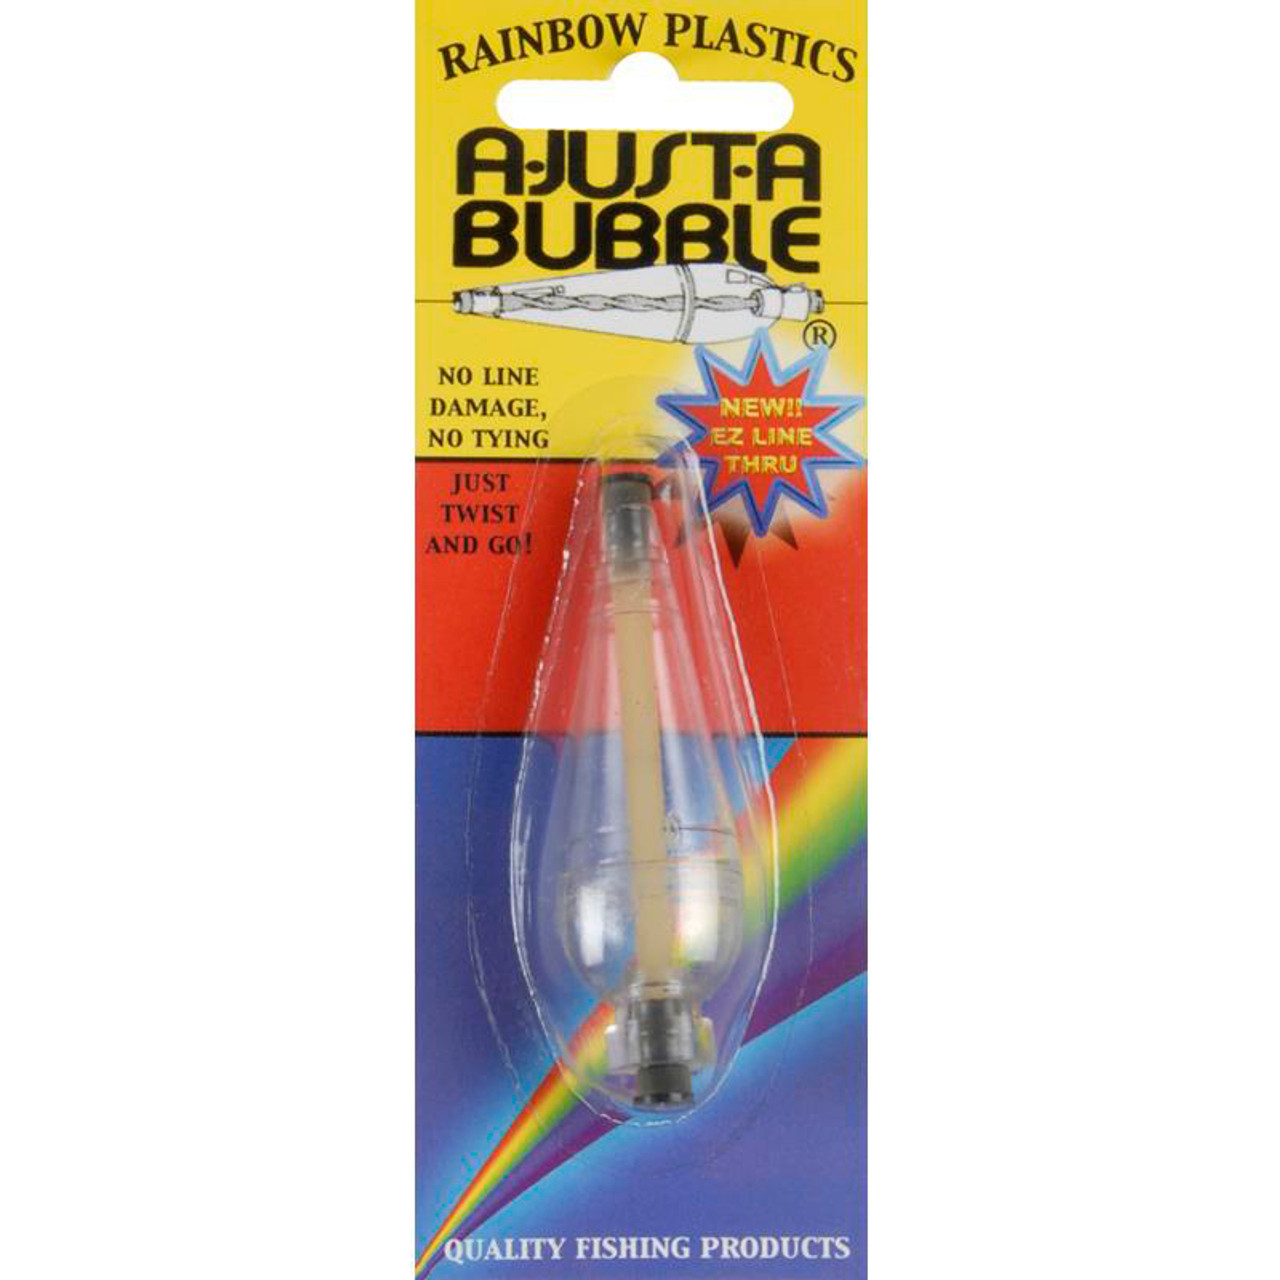 Rainbow Plastics A-Just-A-Bubble Float 3 16 oz. - Clear